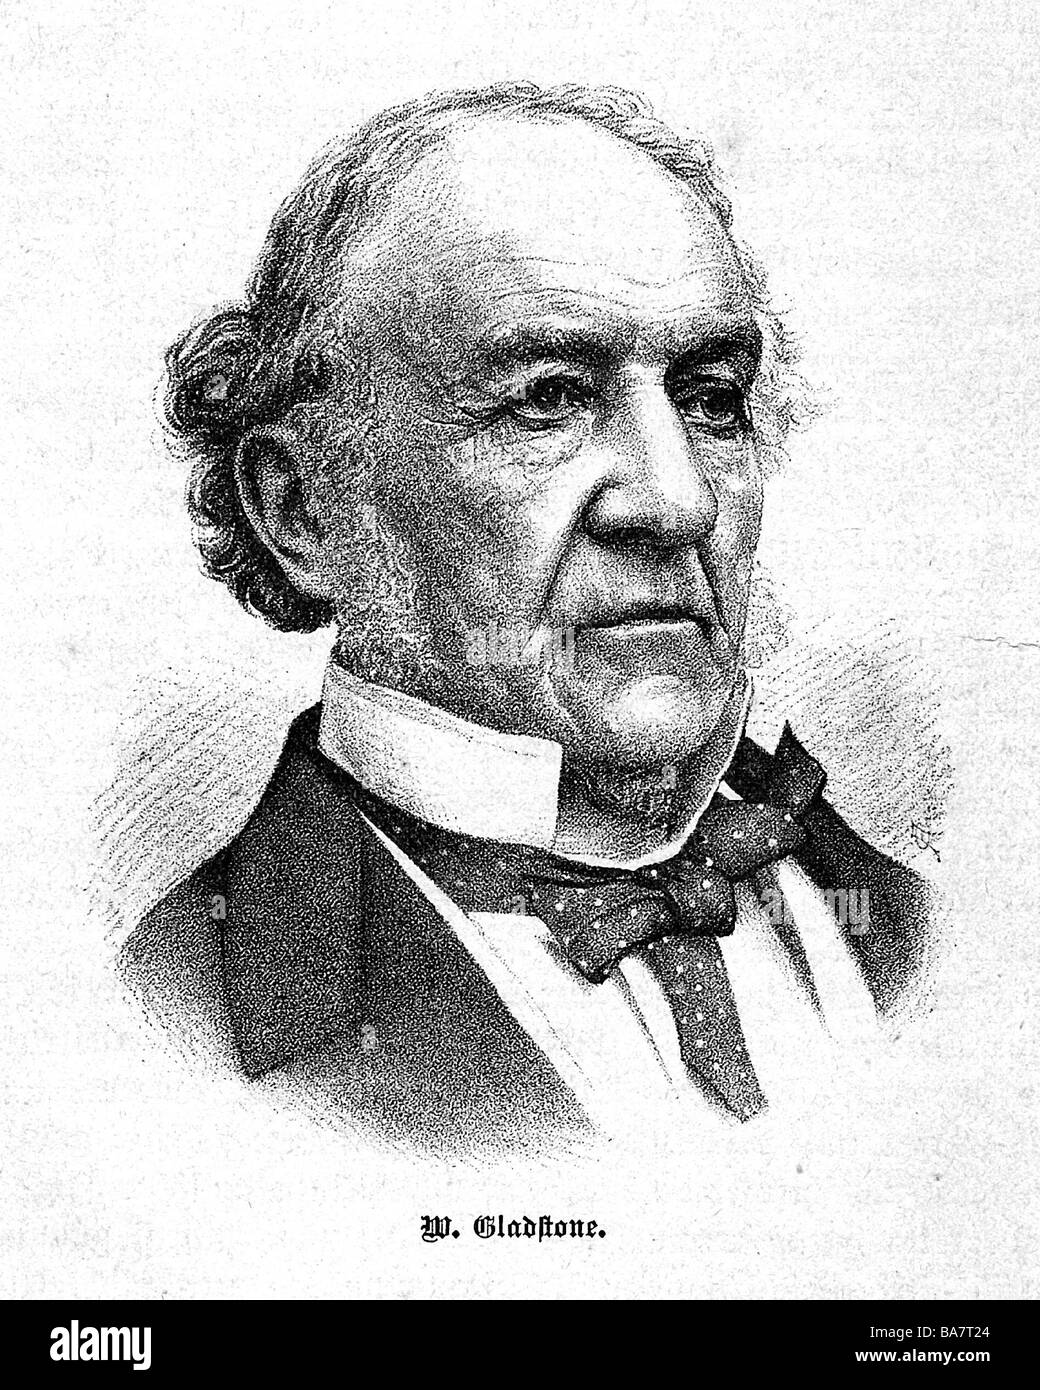 Gladstone, William Eward, 29.12.1809 - 19.5.1898, British politician (Lib.), portrait, wood engraving, late 19th century, , Stock Photo